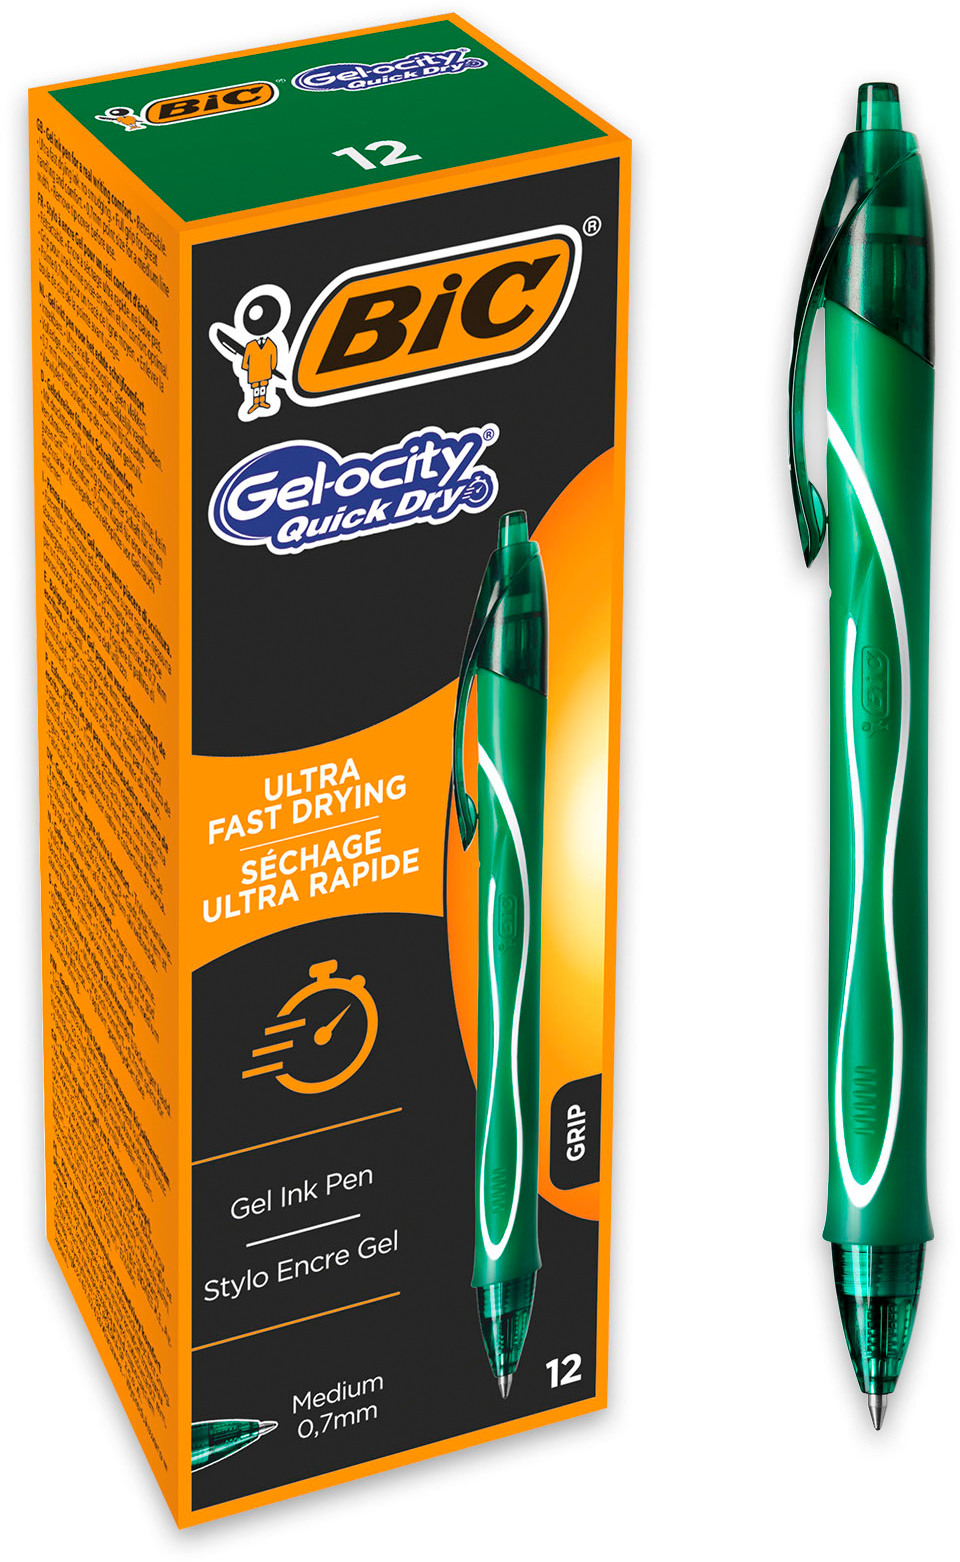 BIC Gel-ocity quick dry 964771 grün, 12 Stück